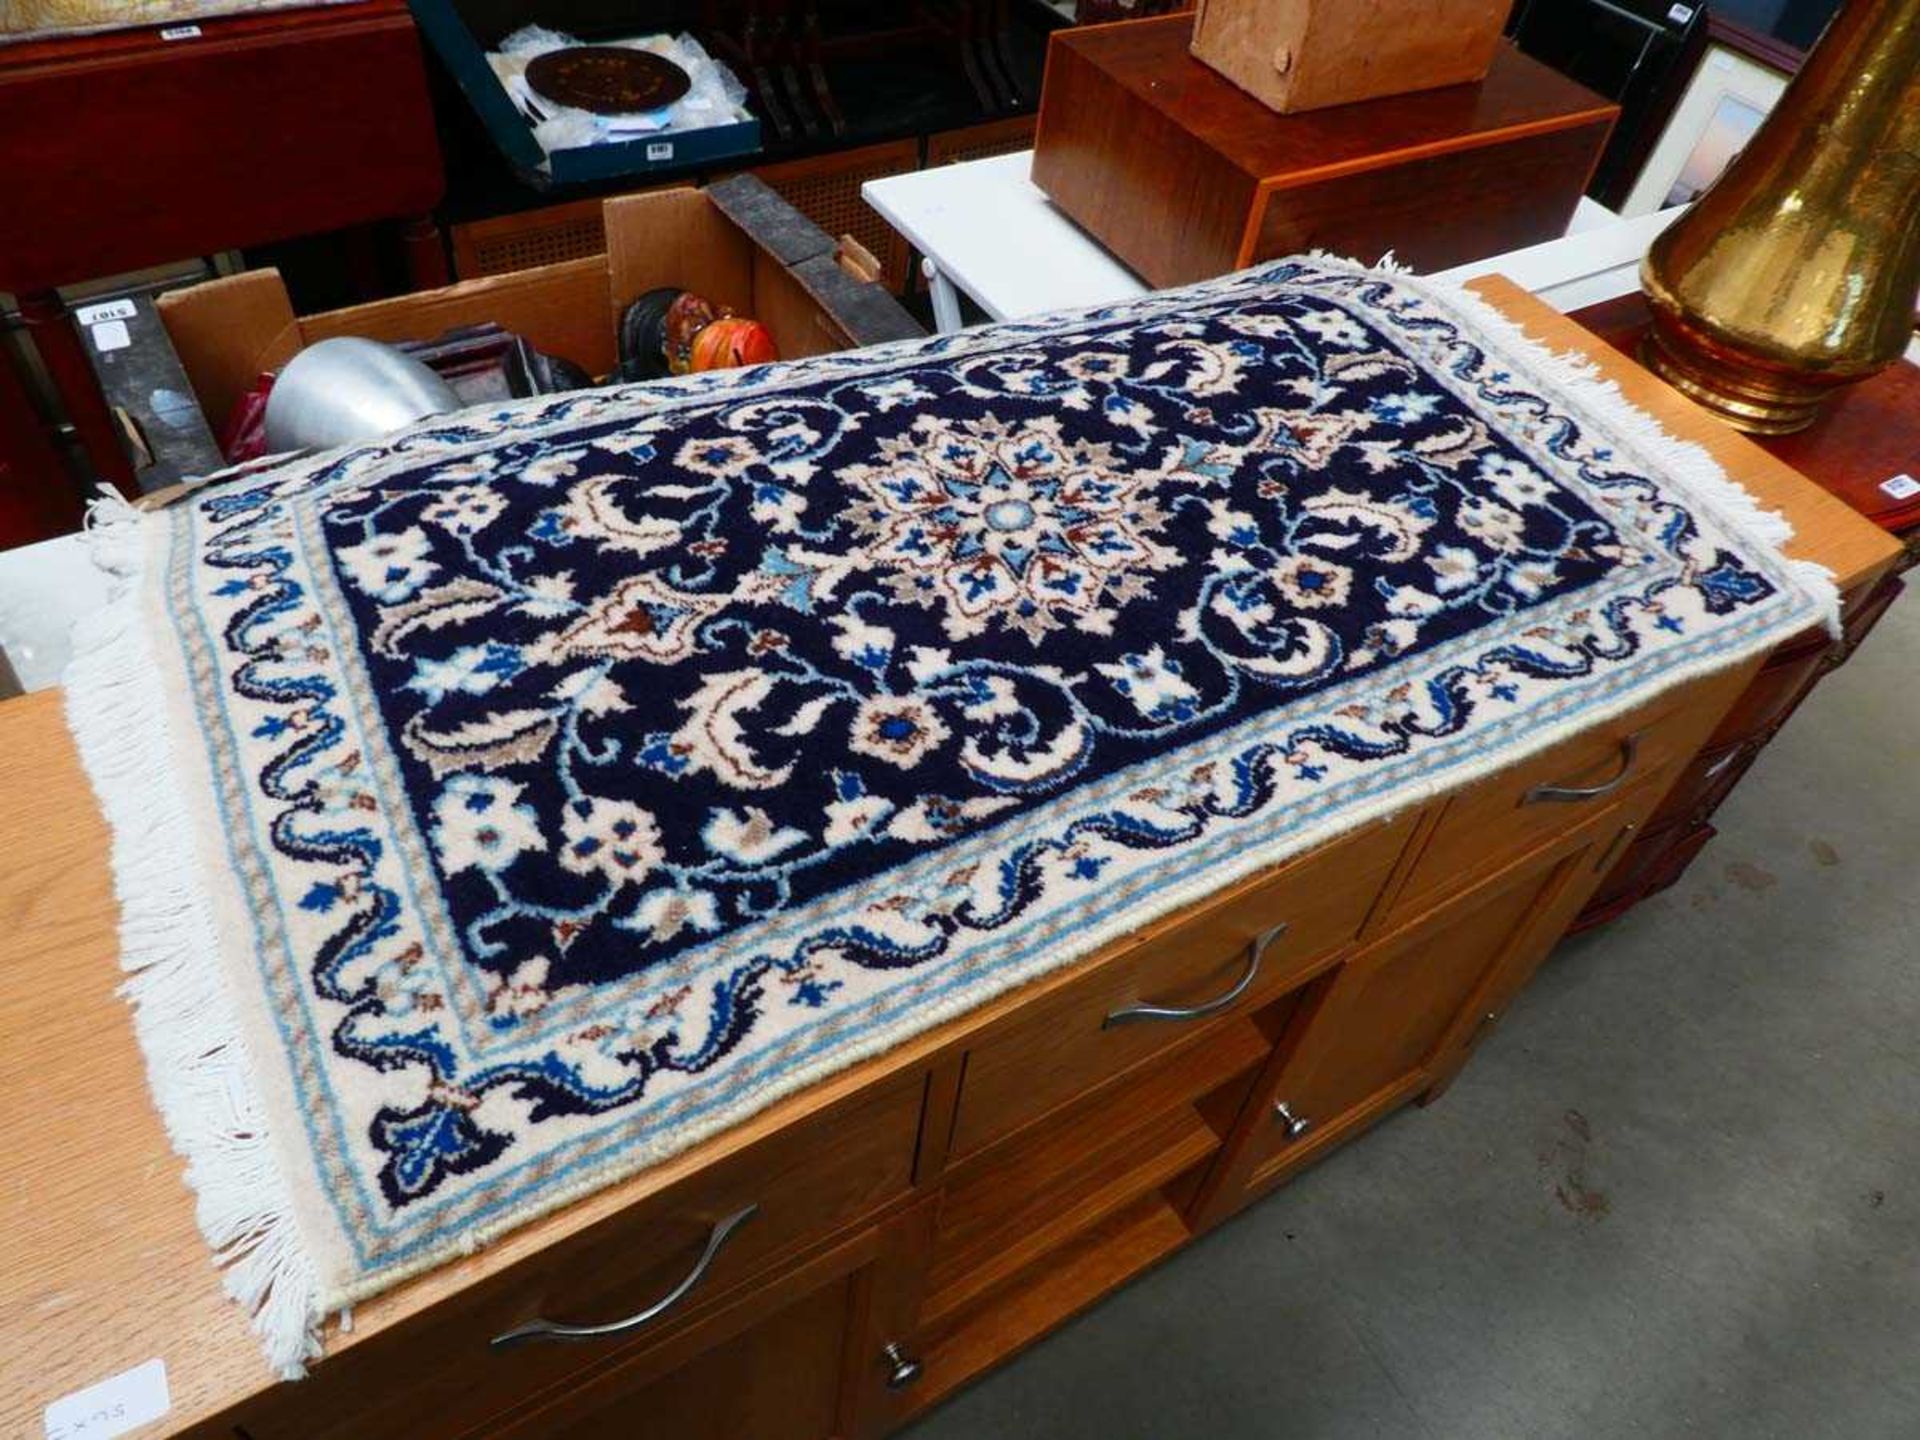 Floral patterned woollen mat